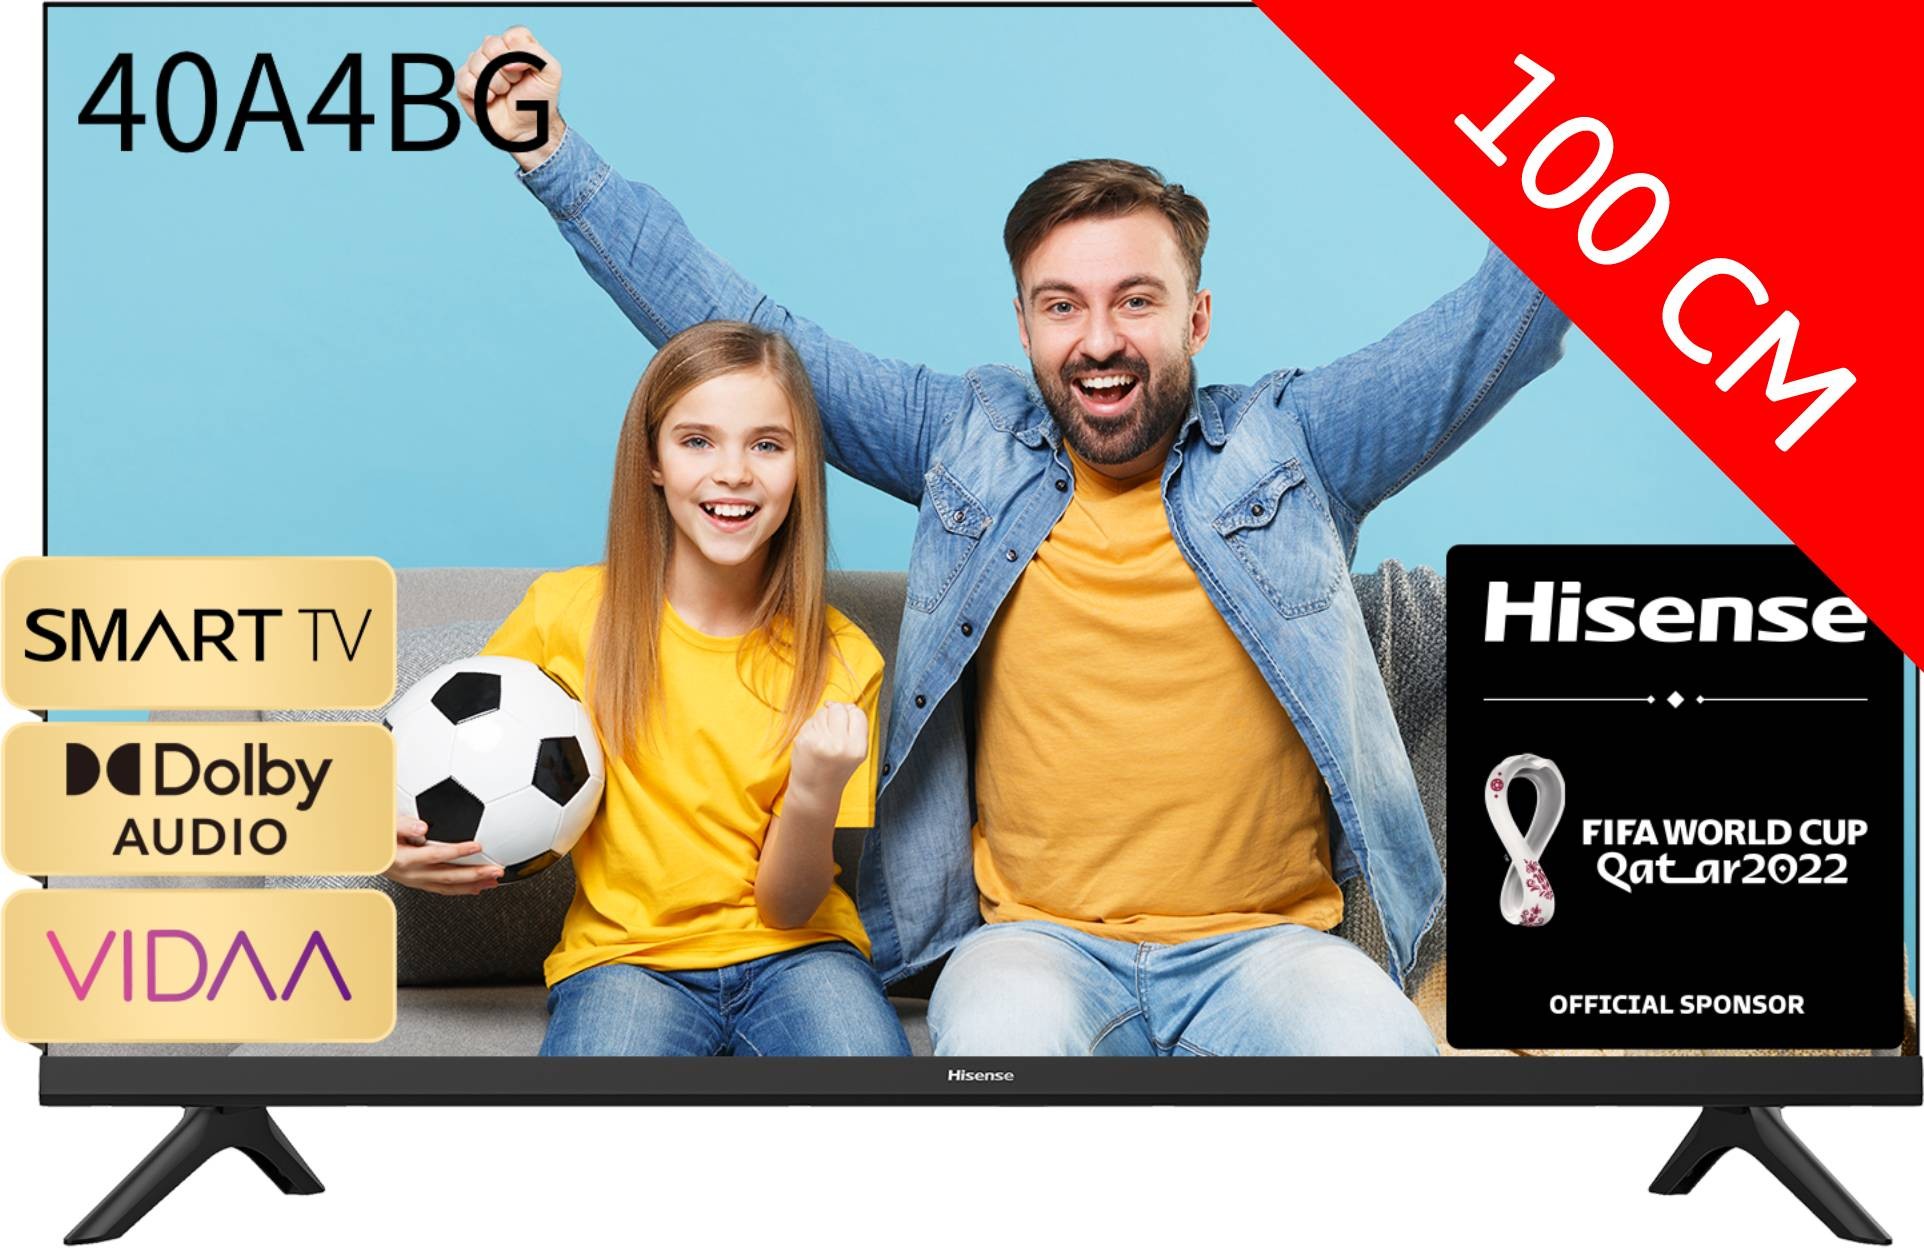 HISENSE TV LED Full HD 100 cm 40"  40A4BG